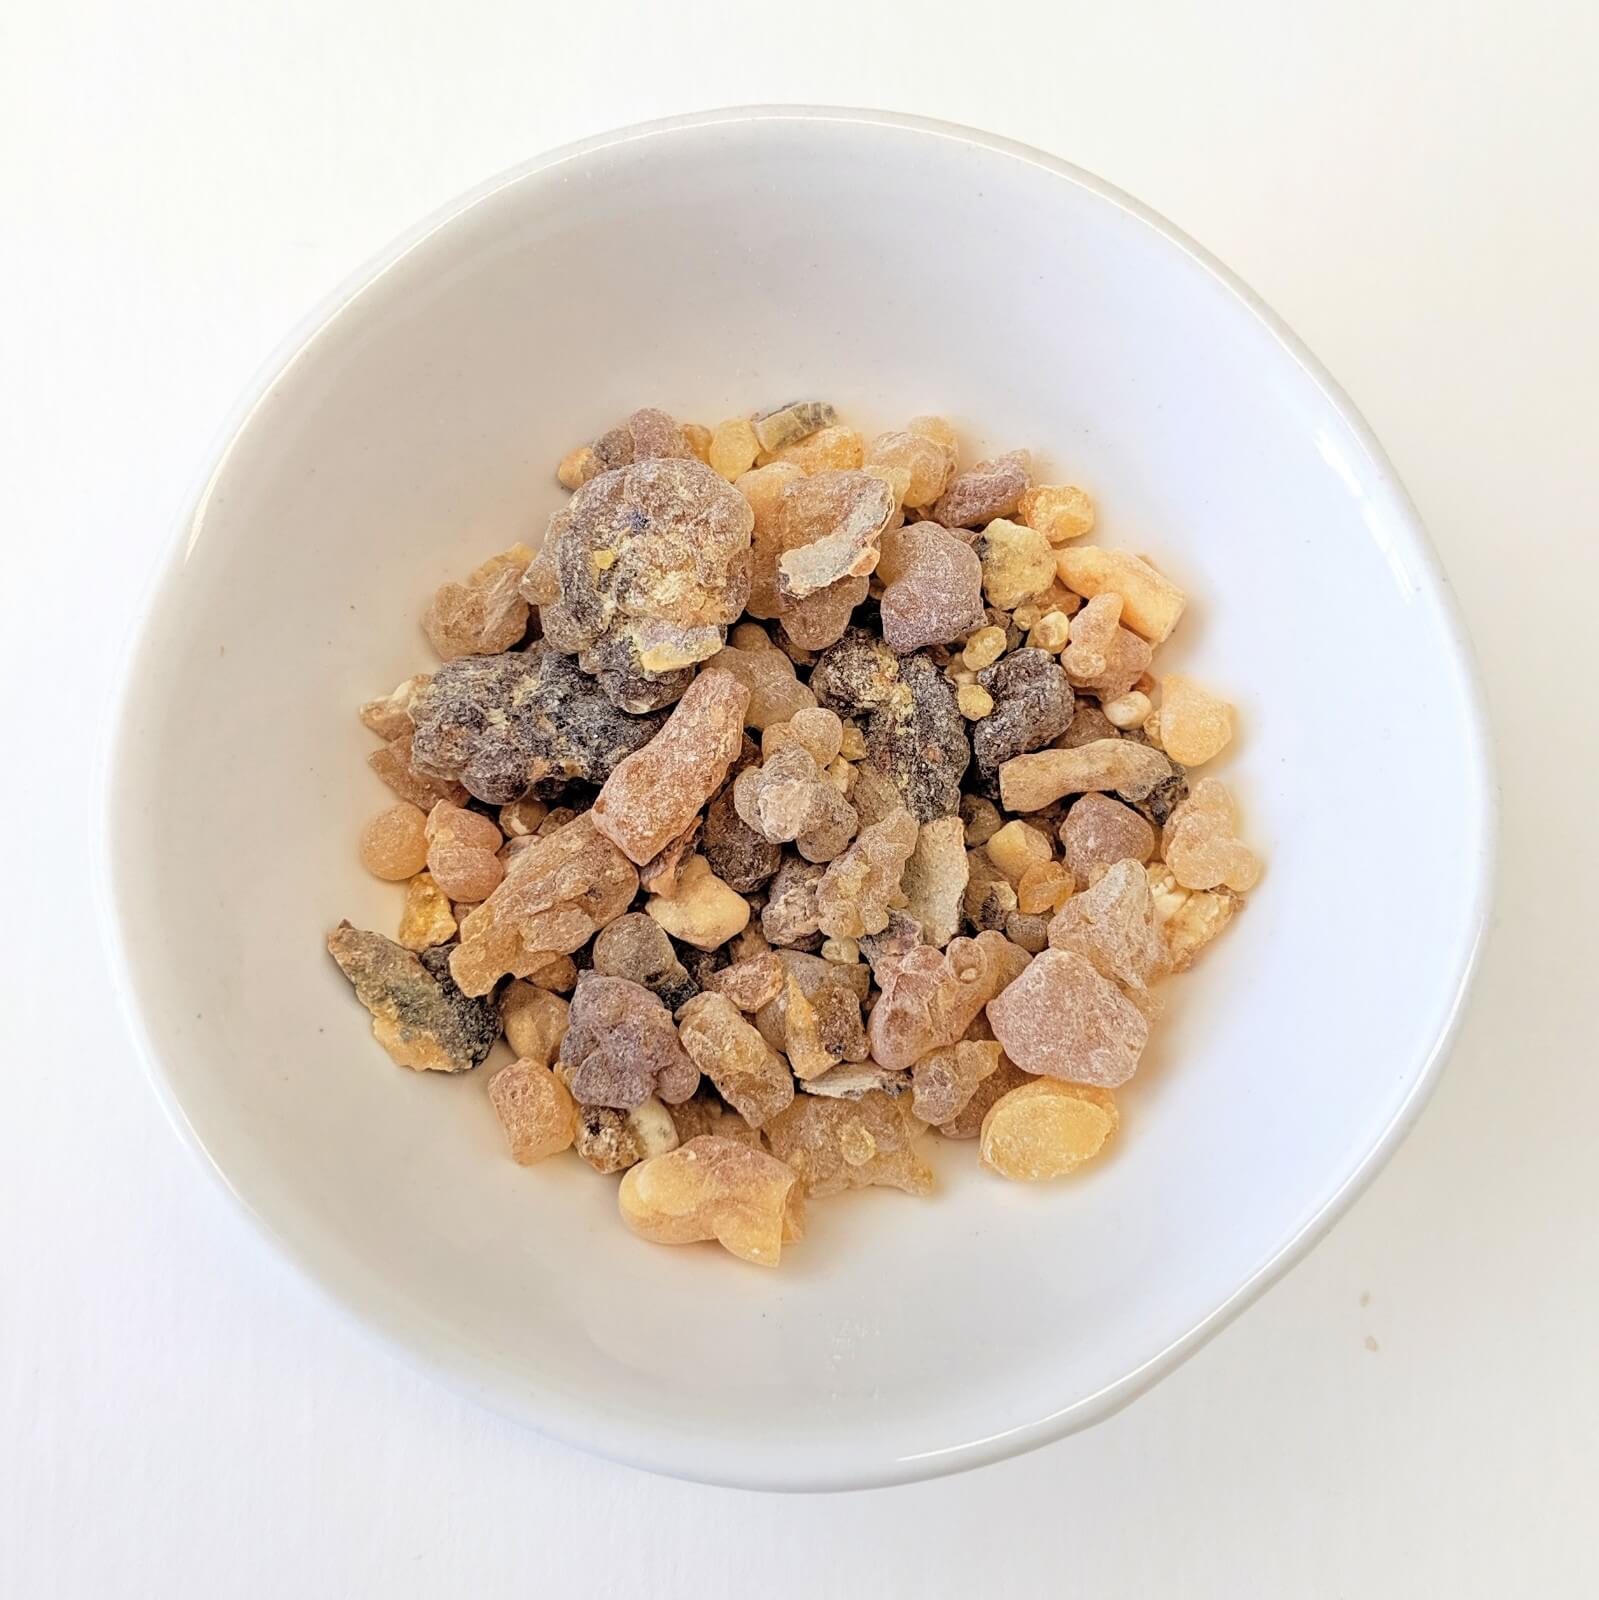 Organic Myrrh Pieces In A White Bowl - Top View